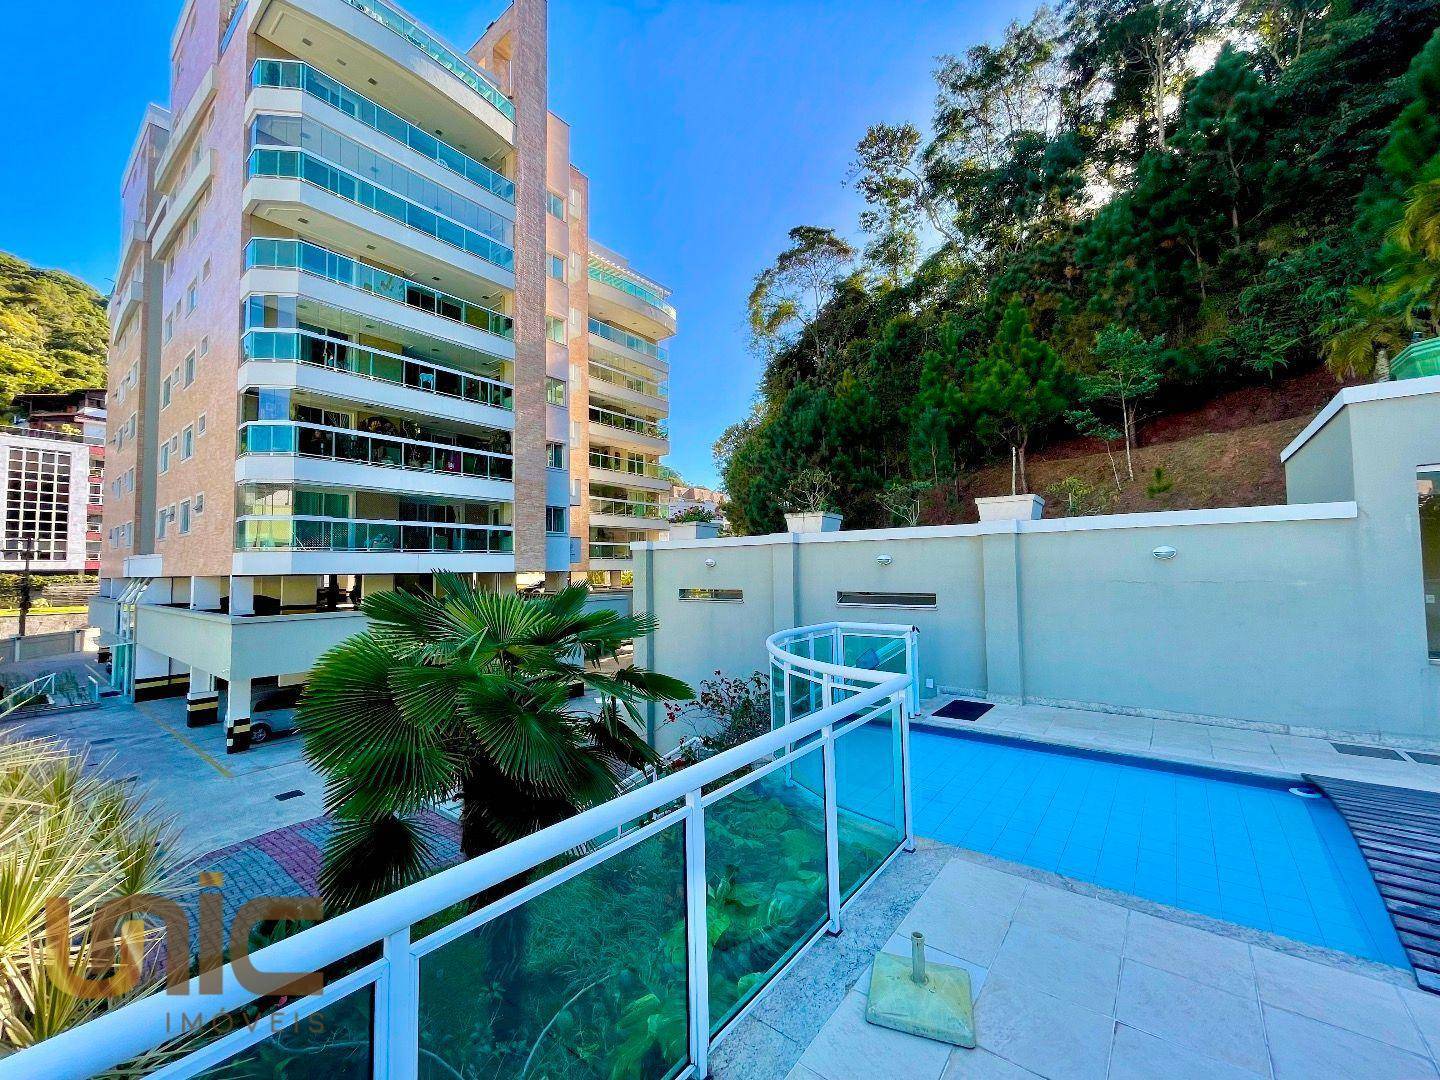 Apartamento à venda em Tijuca, Teresópolis - RJ - Foto 26